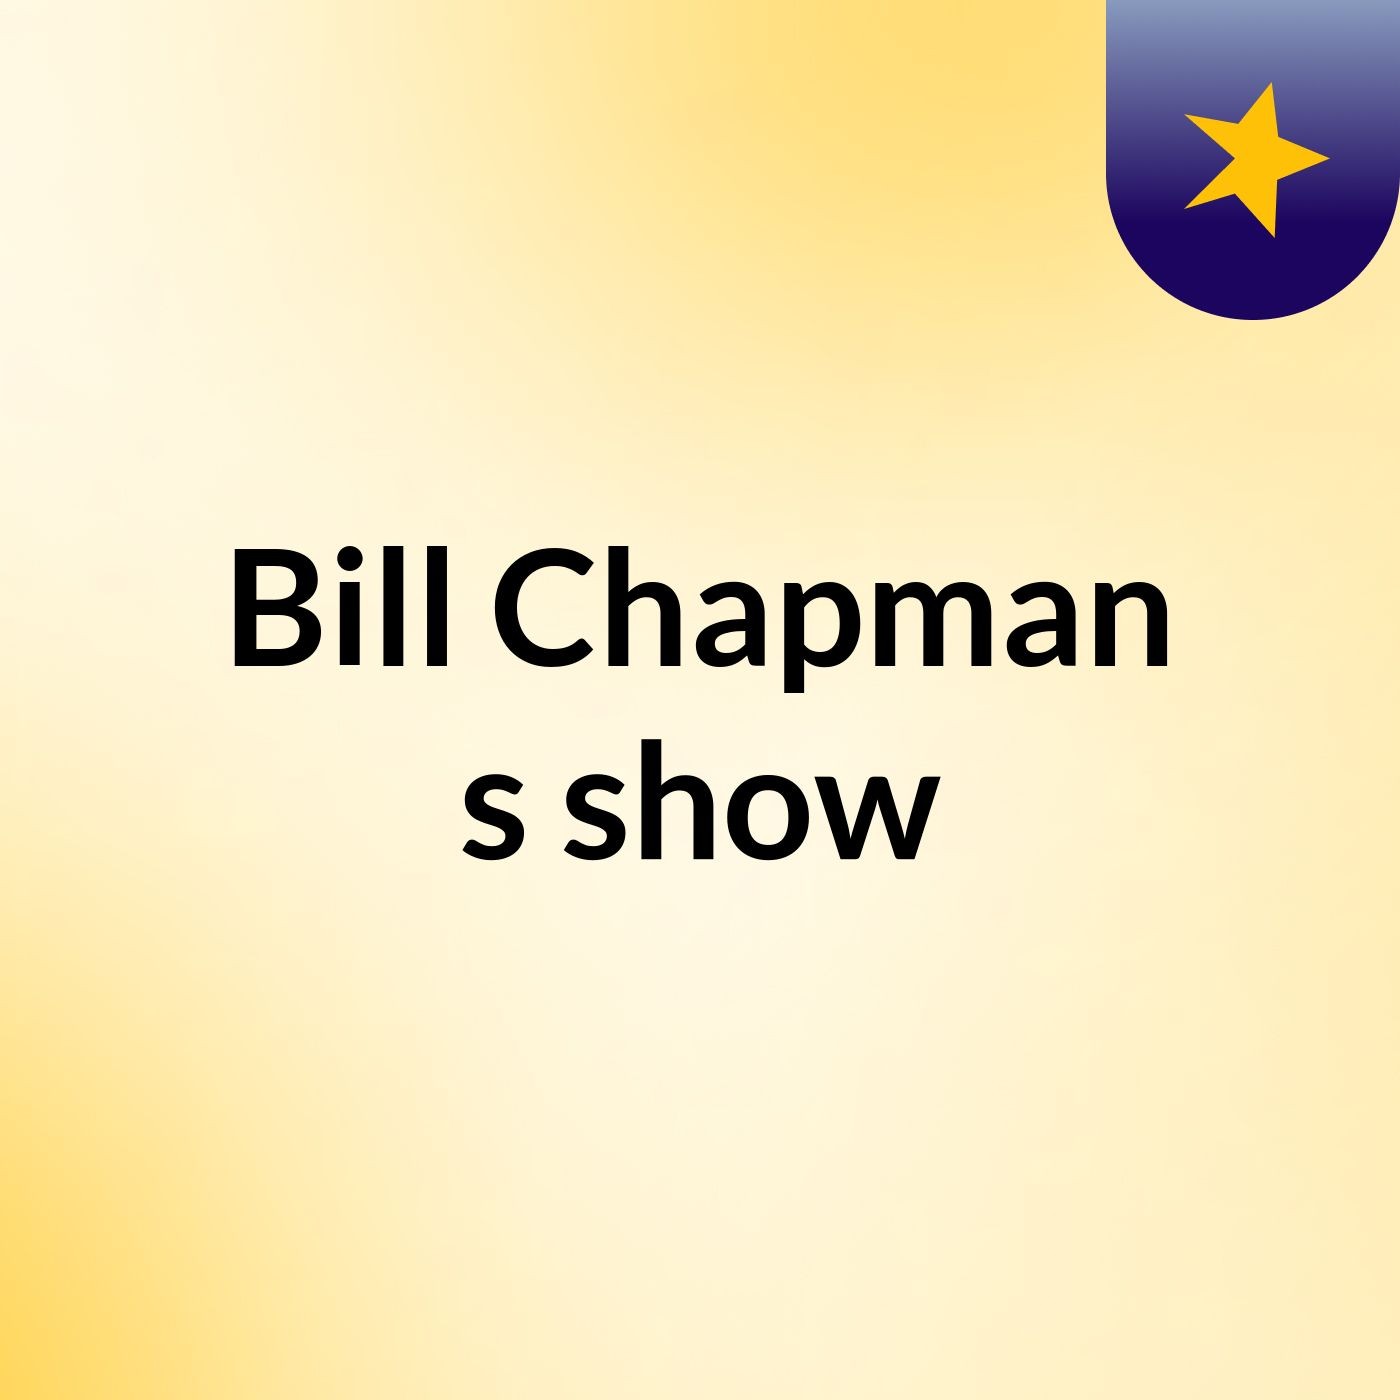 Bill Chapman's show